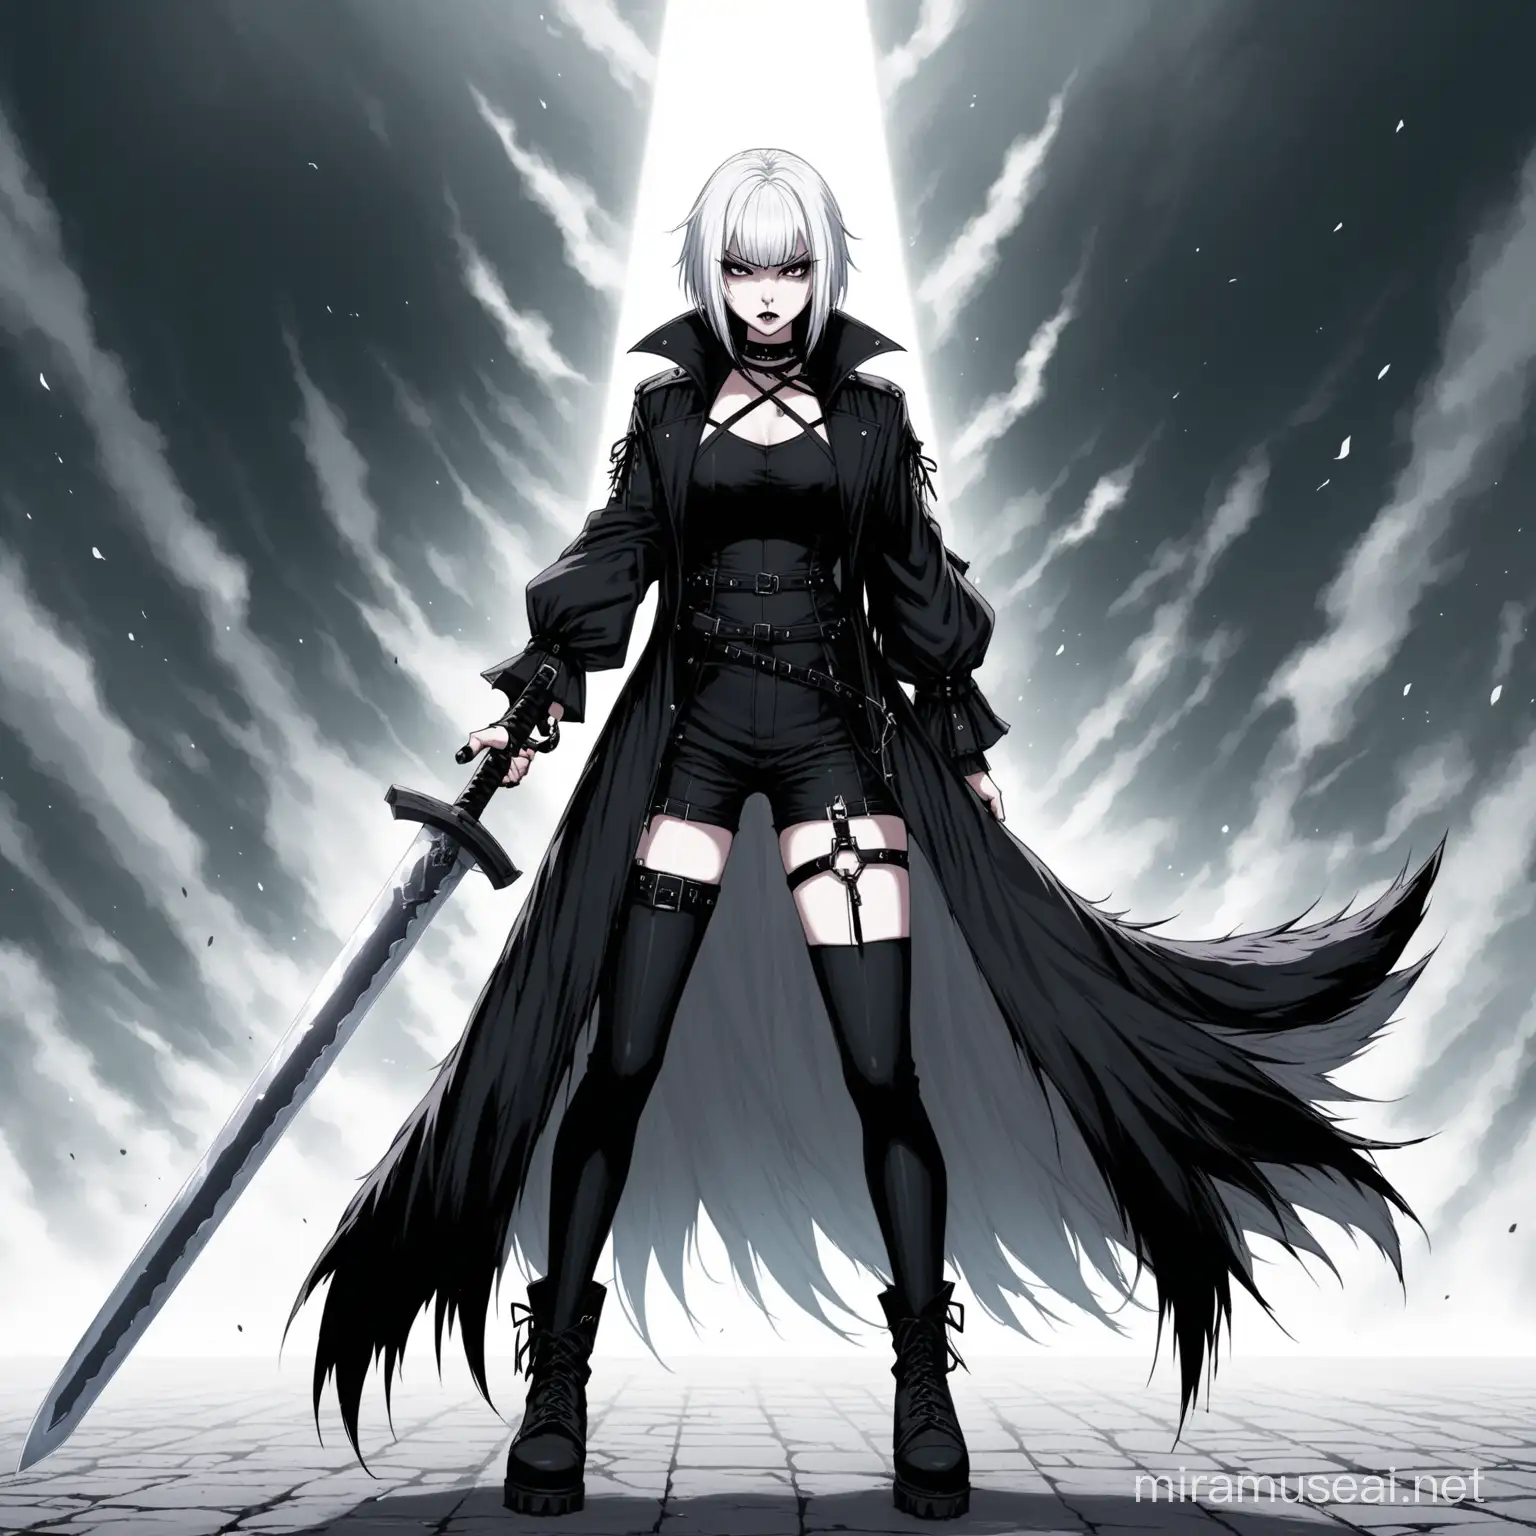 Alternative Goth Girl with White Hair Wielding Giant Sword